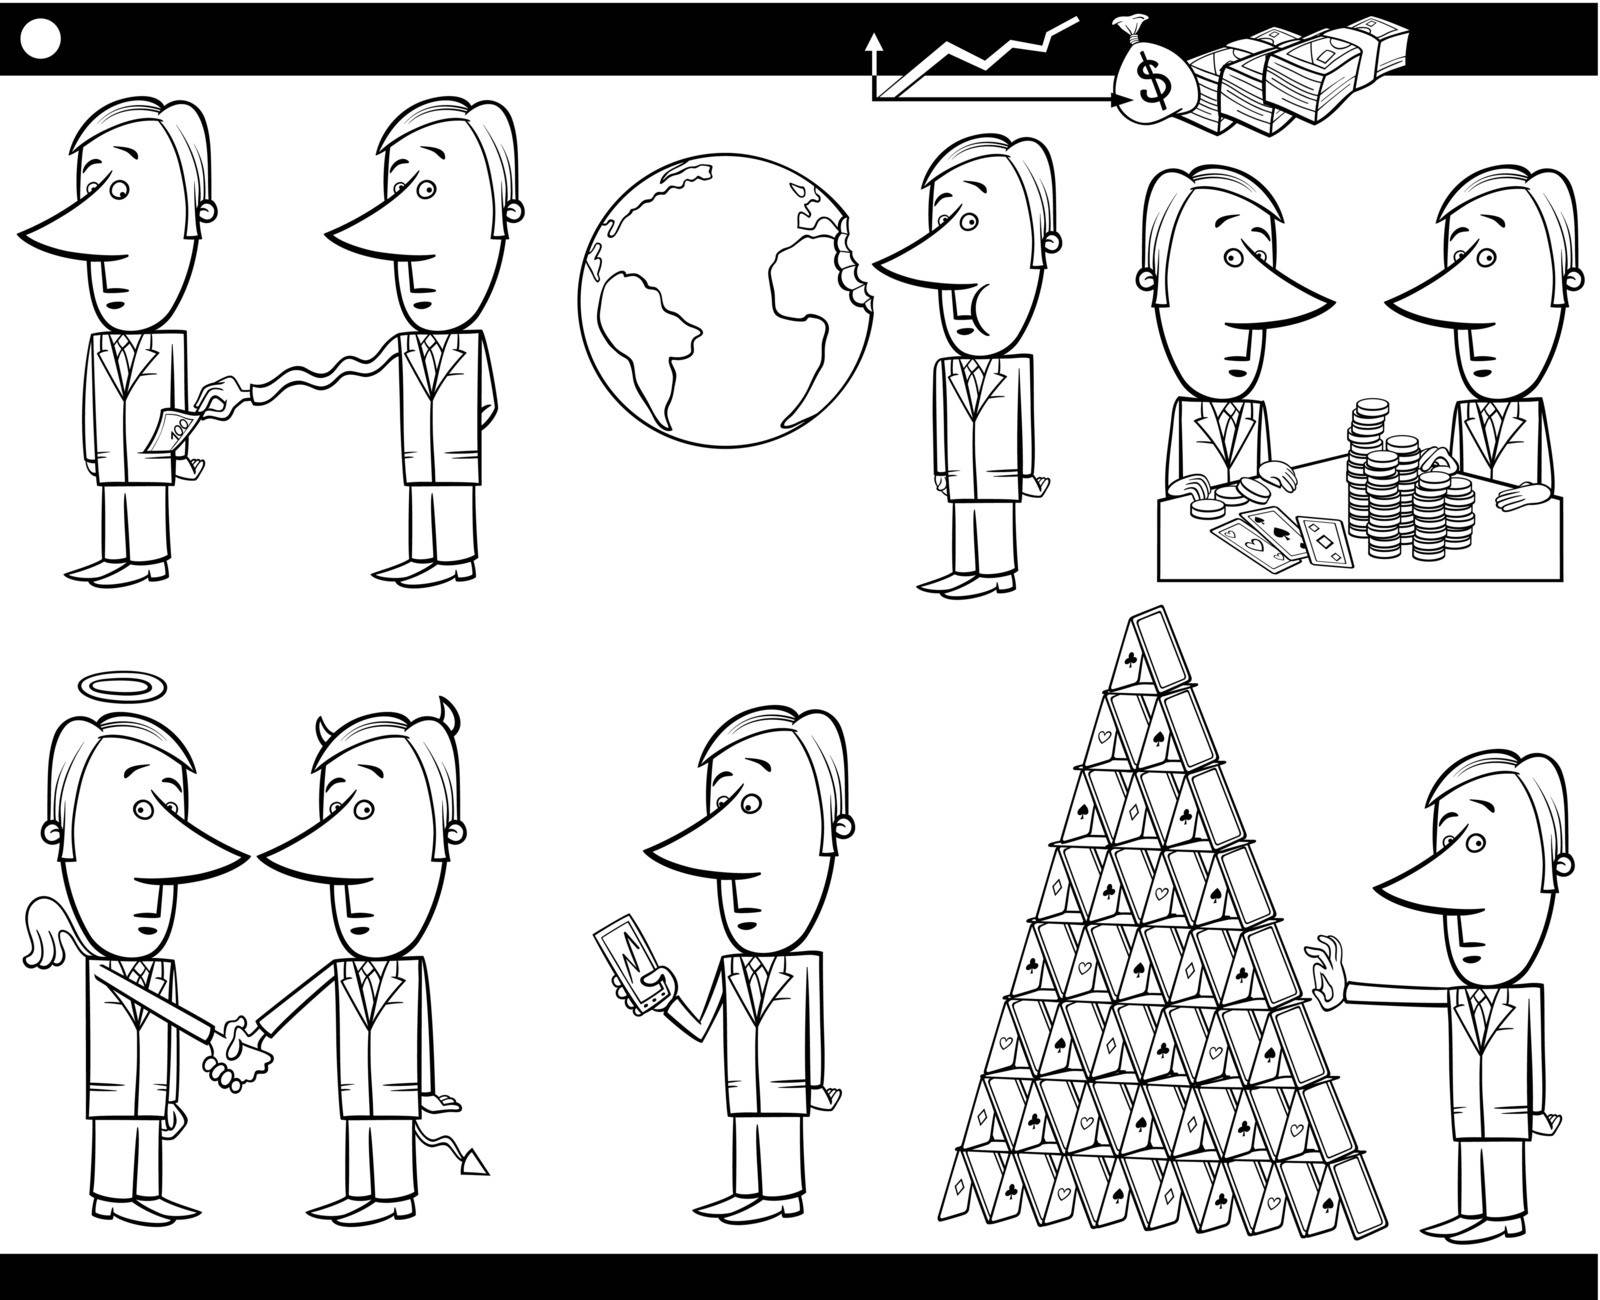 business cartoon concepts and ideas set by izakowski